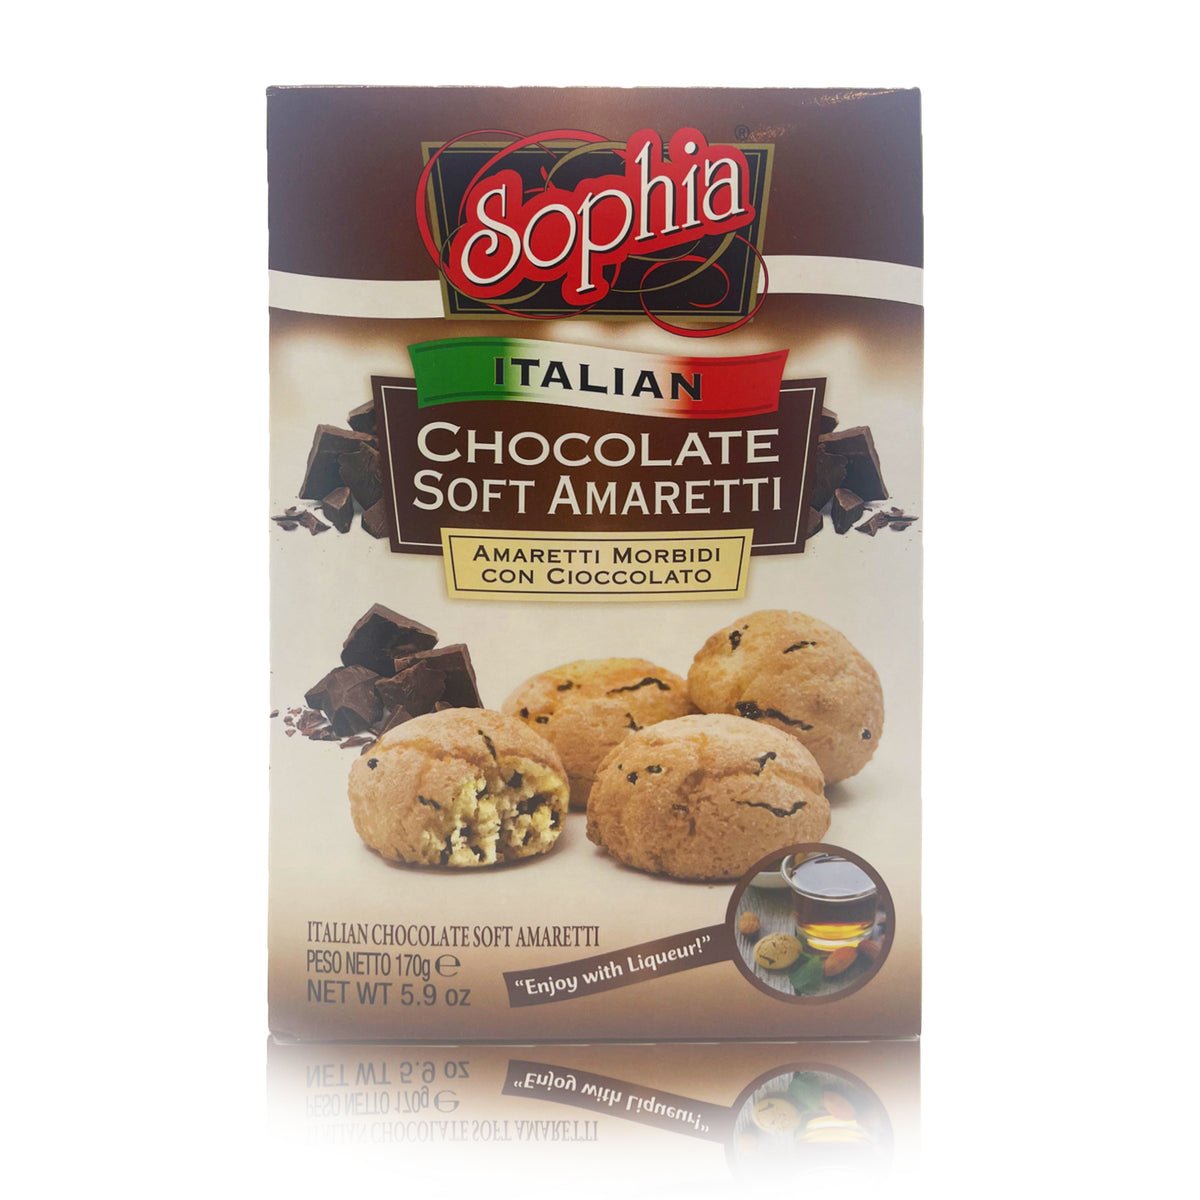 Sophia Soft Amaretti - Chocolate